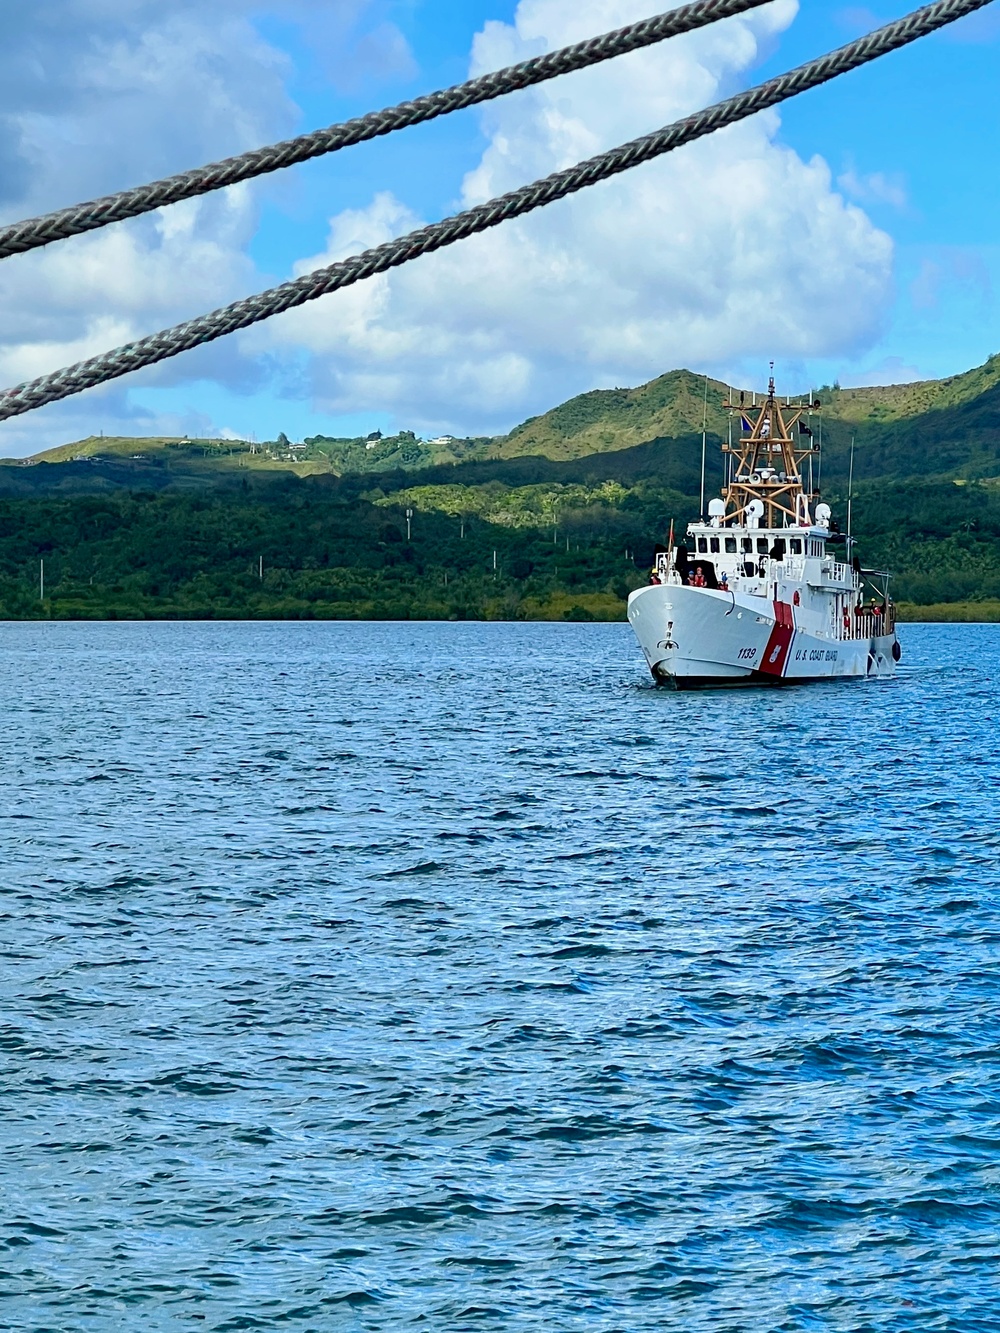 USCGC Myrtle Hazard (WPC 1139) returns from patrol, medical transport from uninhabited island in CNMI